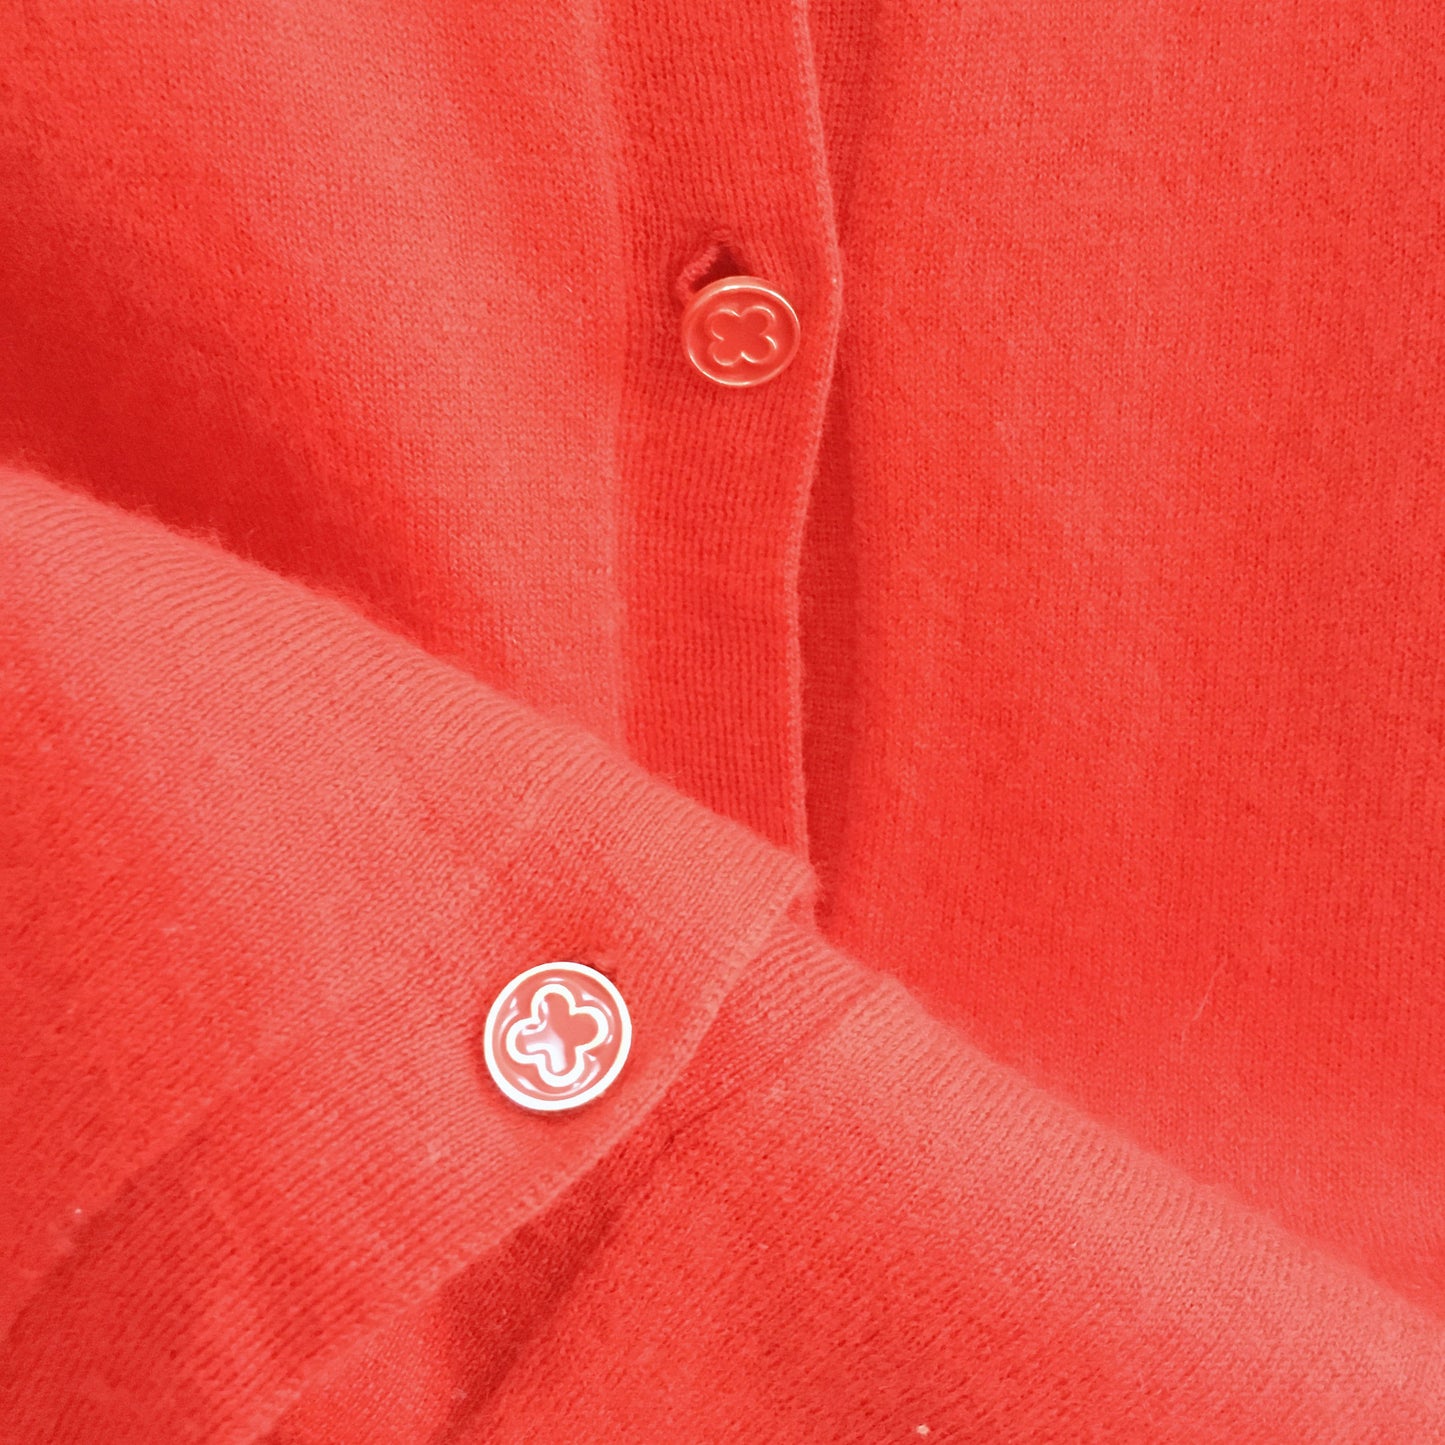 Pink Tartan Button-Back Sweater - size Small